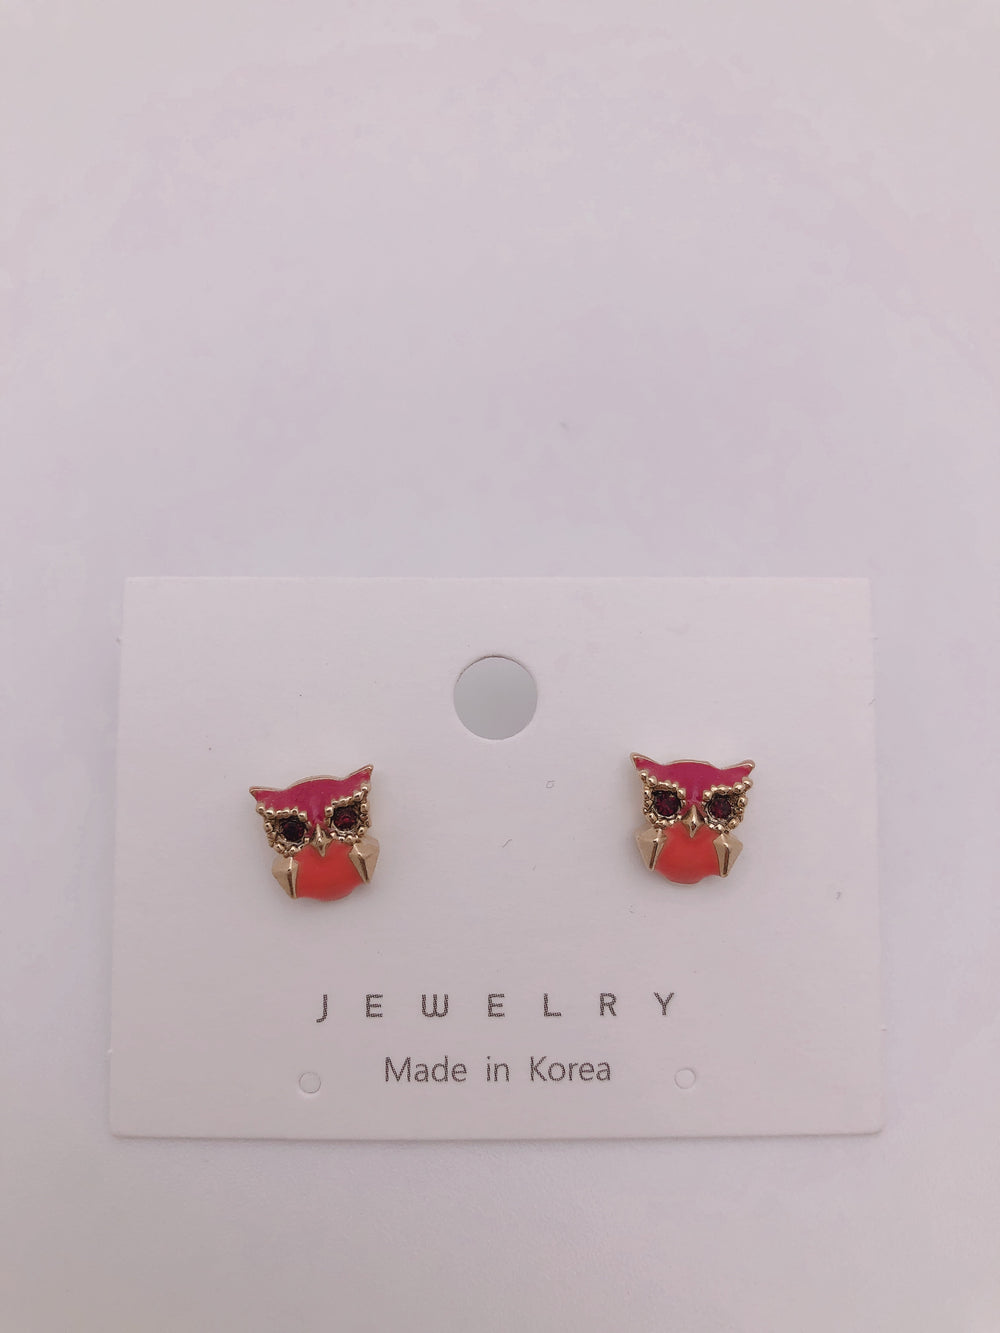 Tiny owl earrings